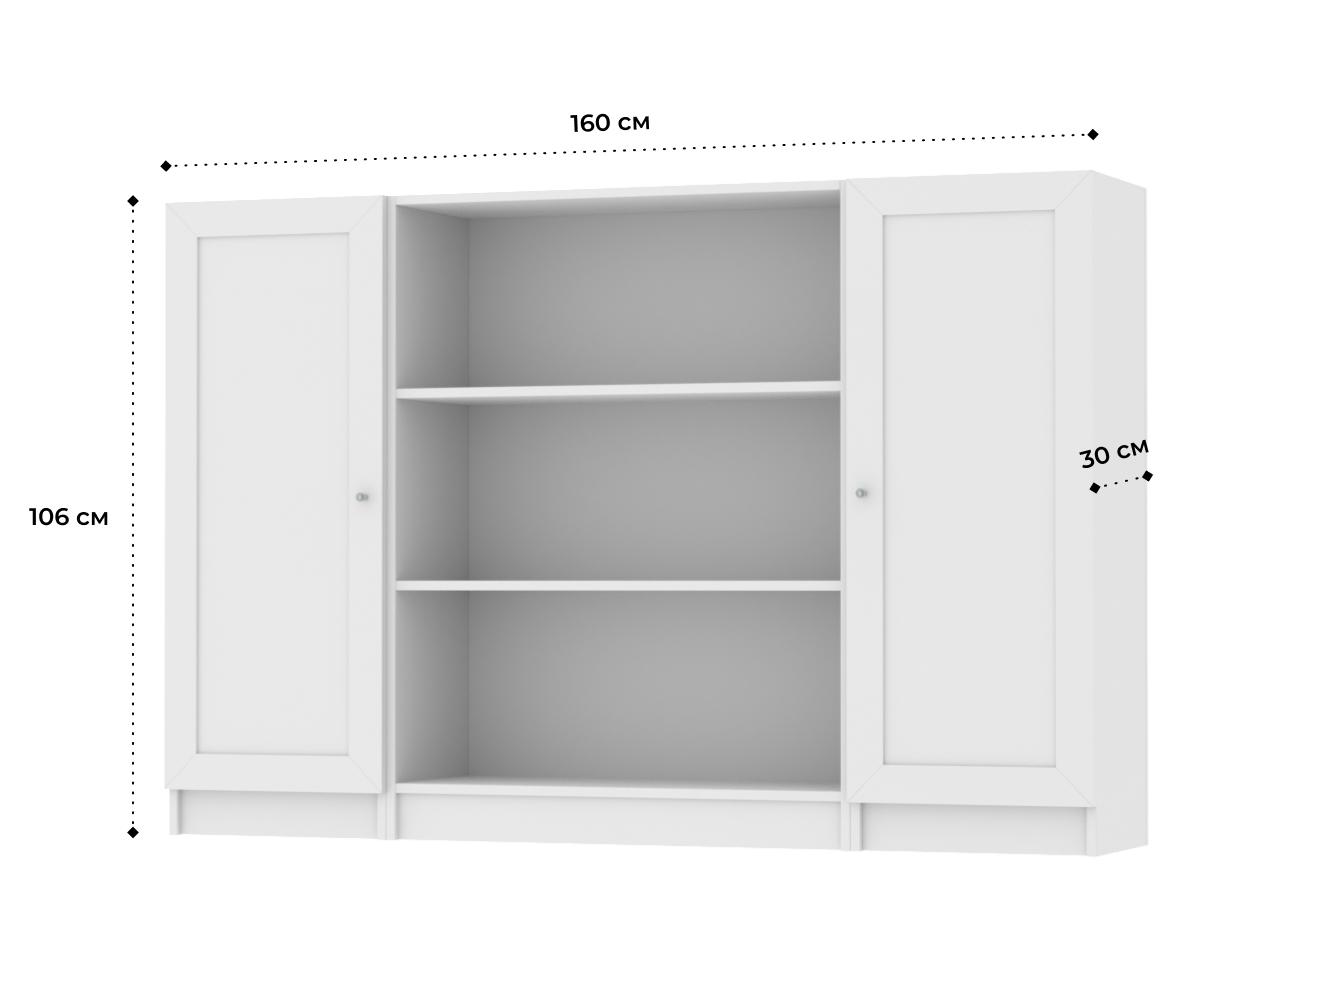 Изображение товара Комод Билли 214 white ИКЕА (IKEA), 160x30x106 см на сайте adeta.ru